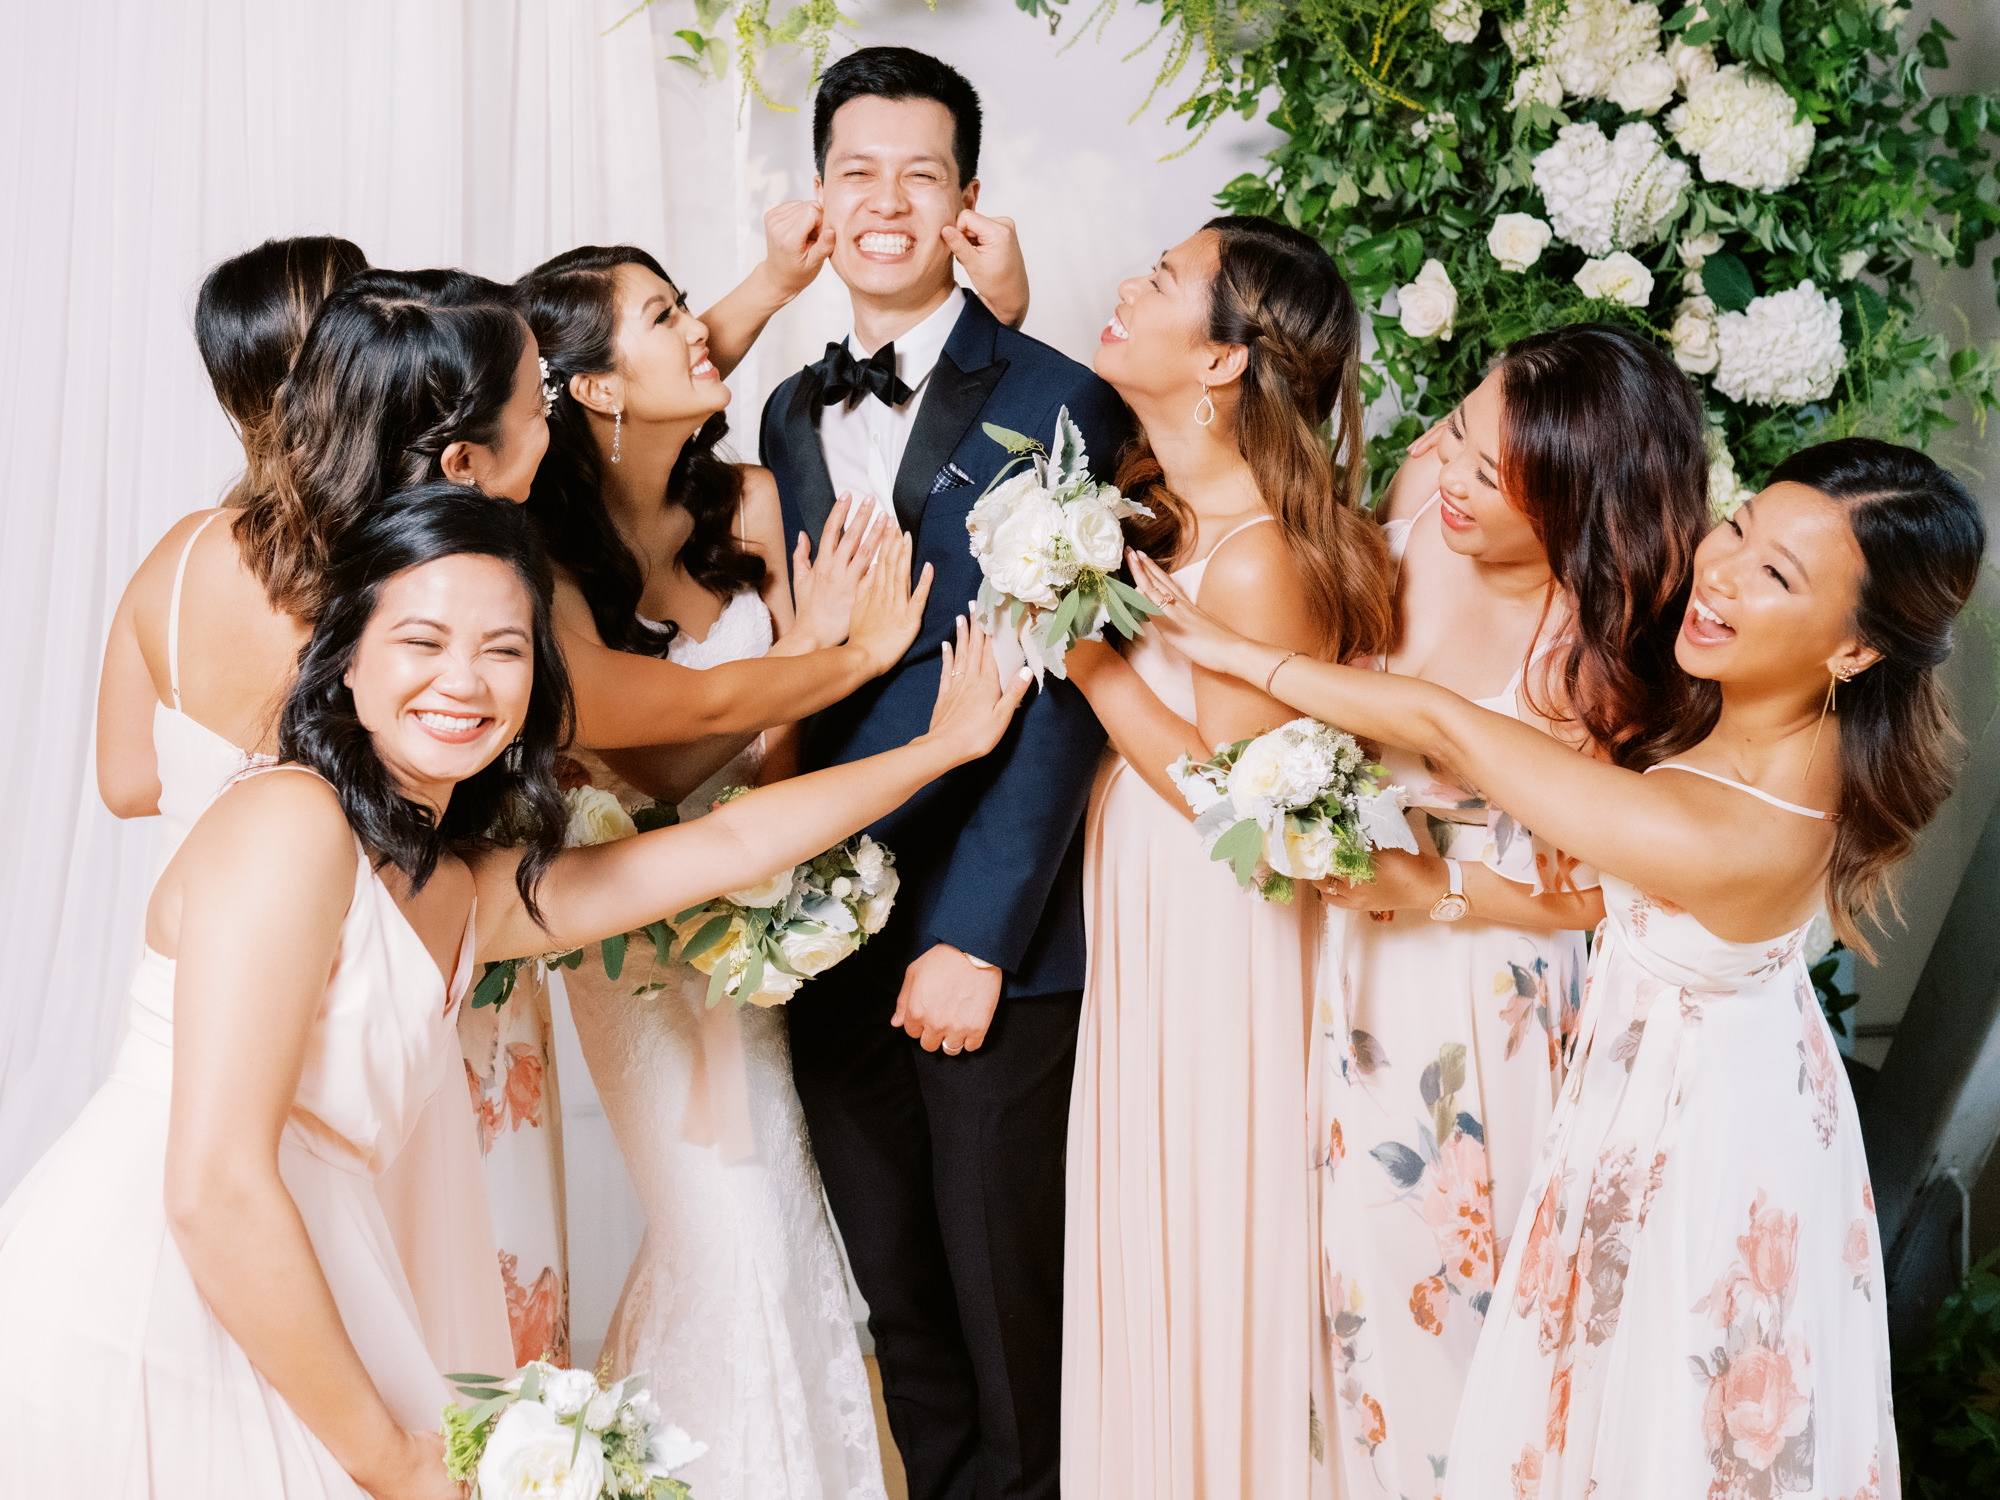 The Metropolist Seattle Weddings: Groom with bridesmaids